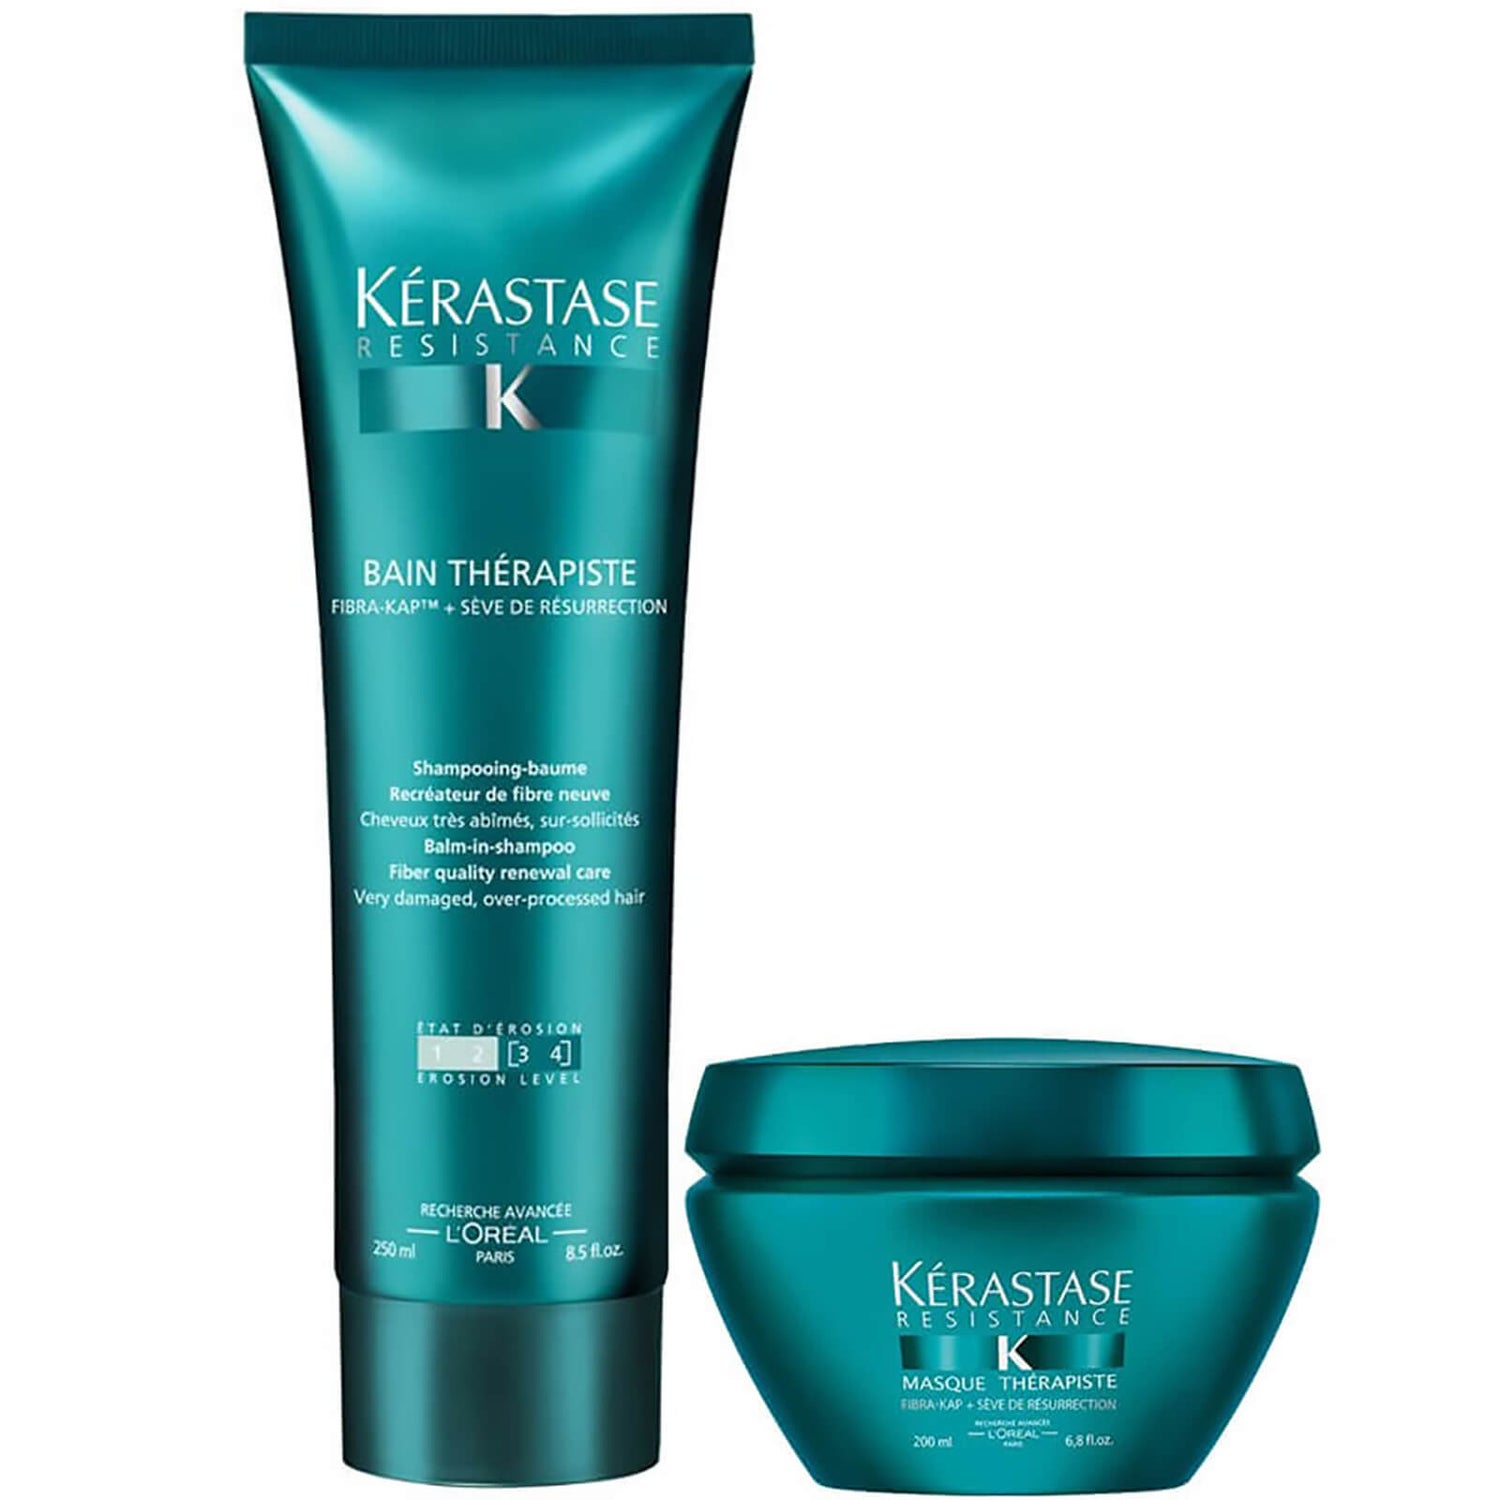 Kérastase Resistance Therapiste duo shampooing (250ml) et masque (200ml)